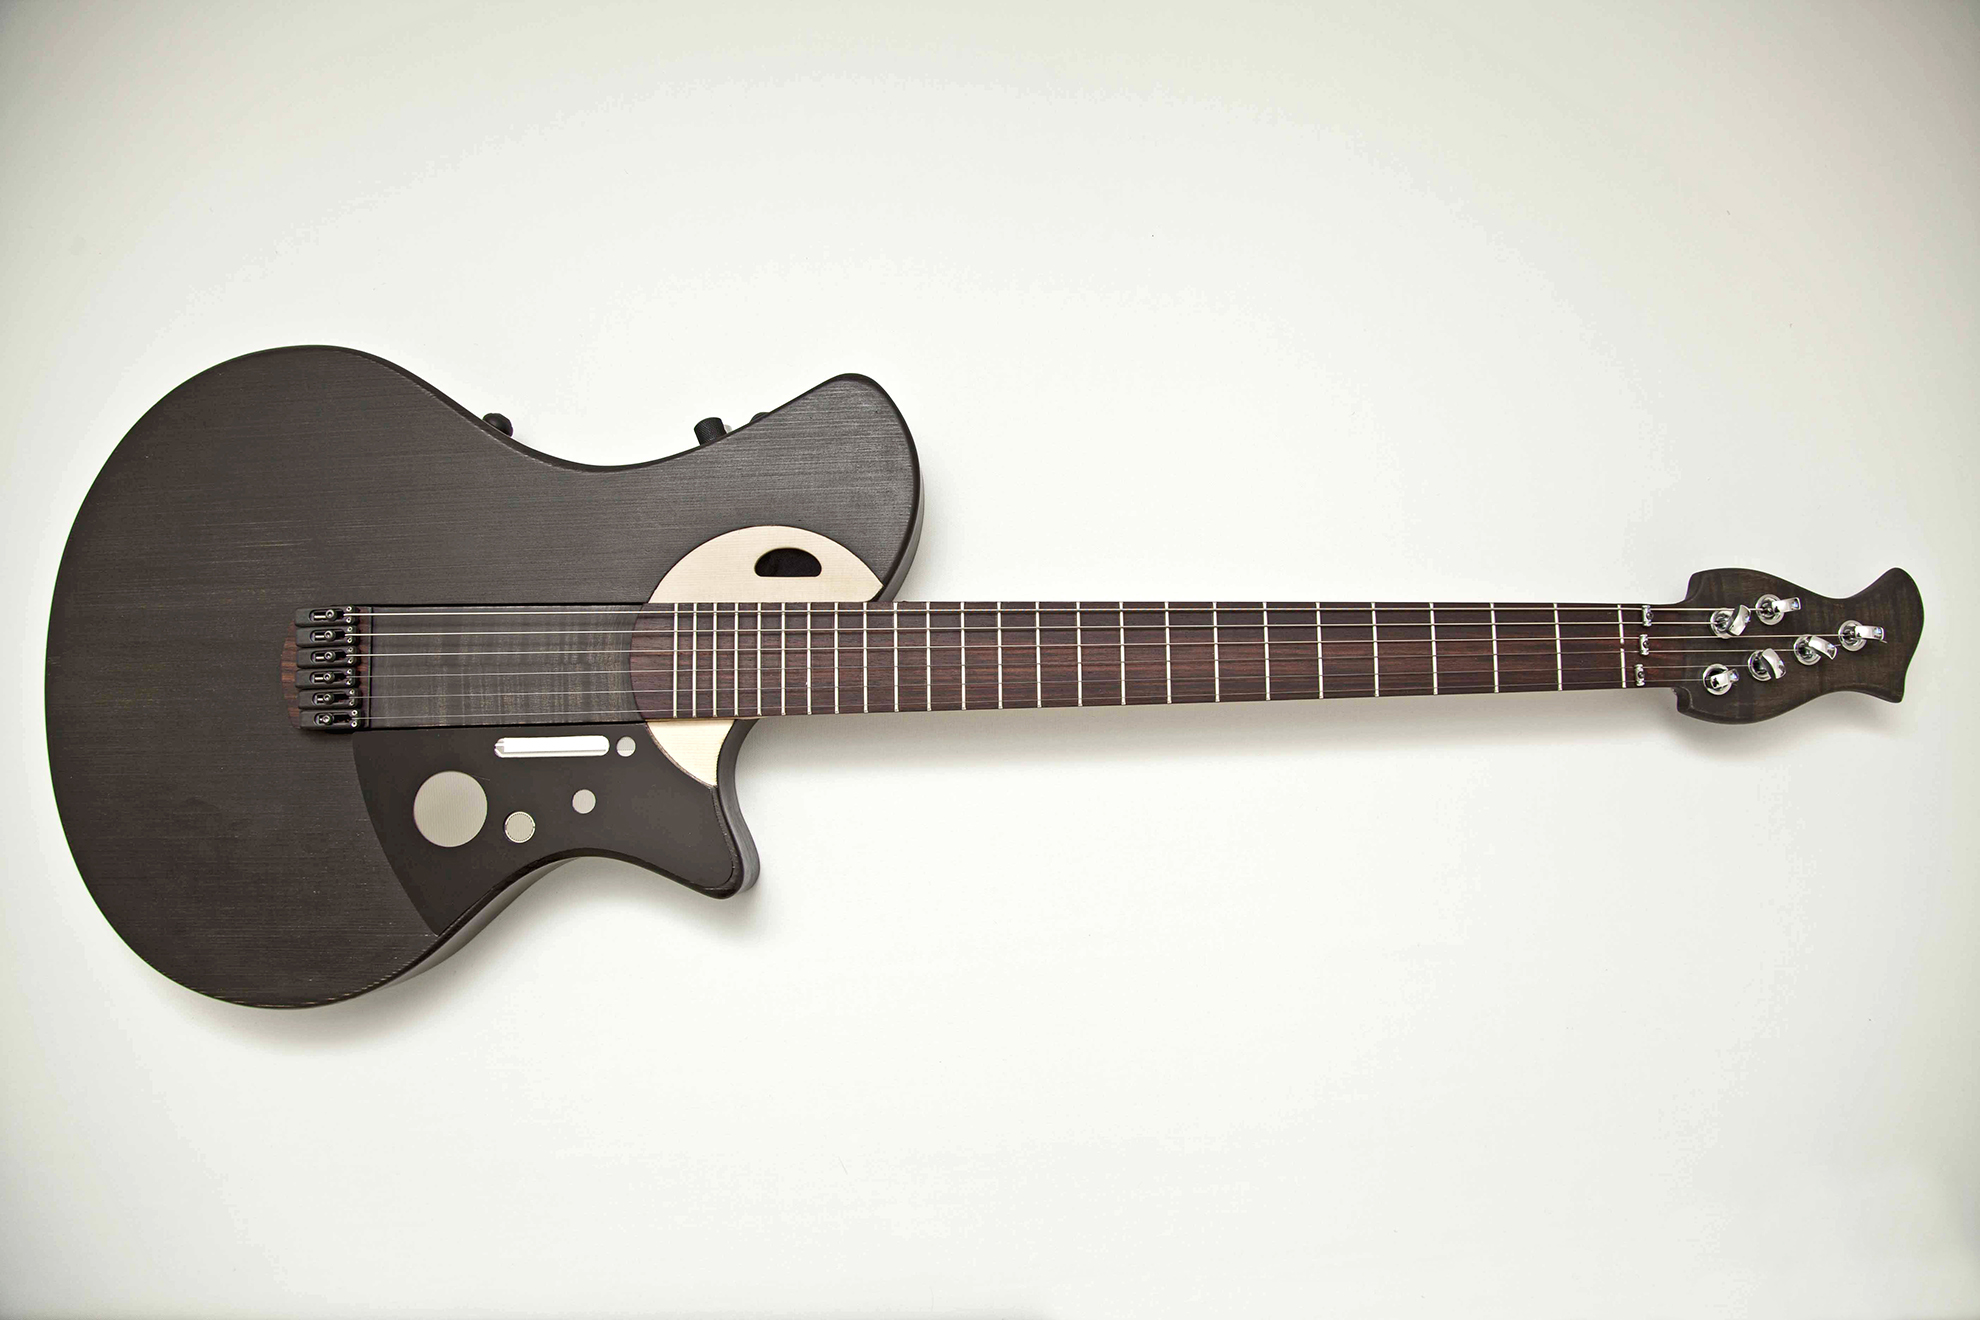 Sensus Smart Guitar evolves the guitar into an effect riddled dream machine